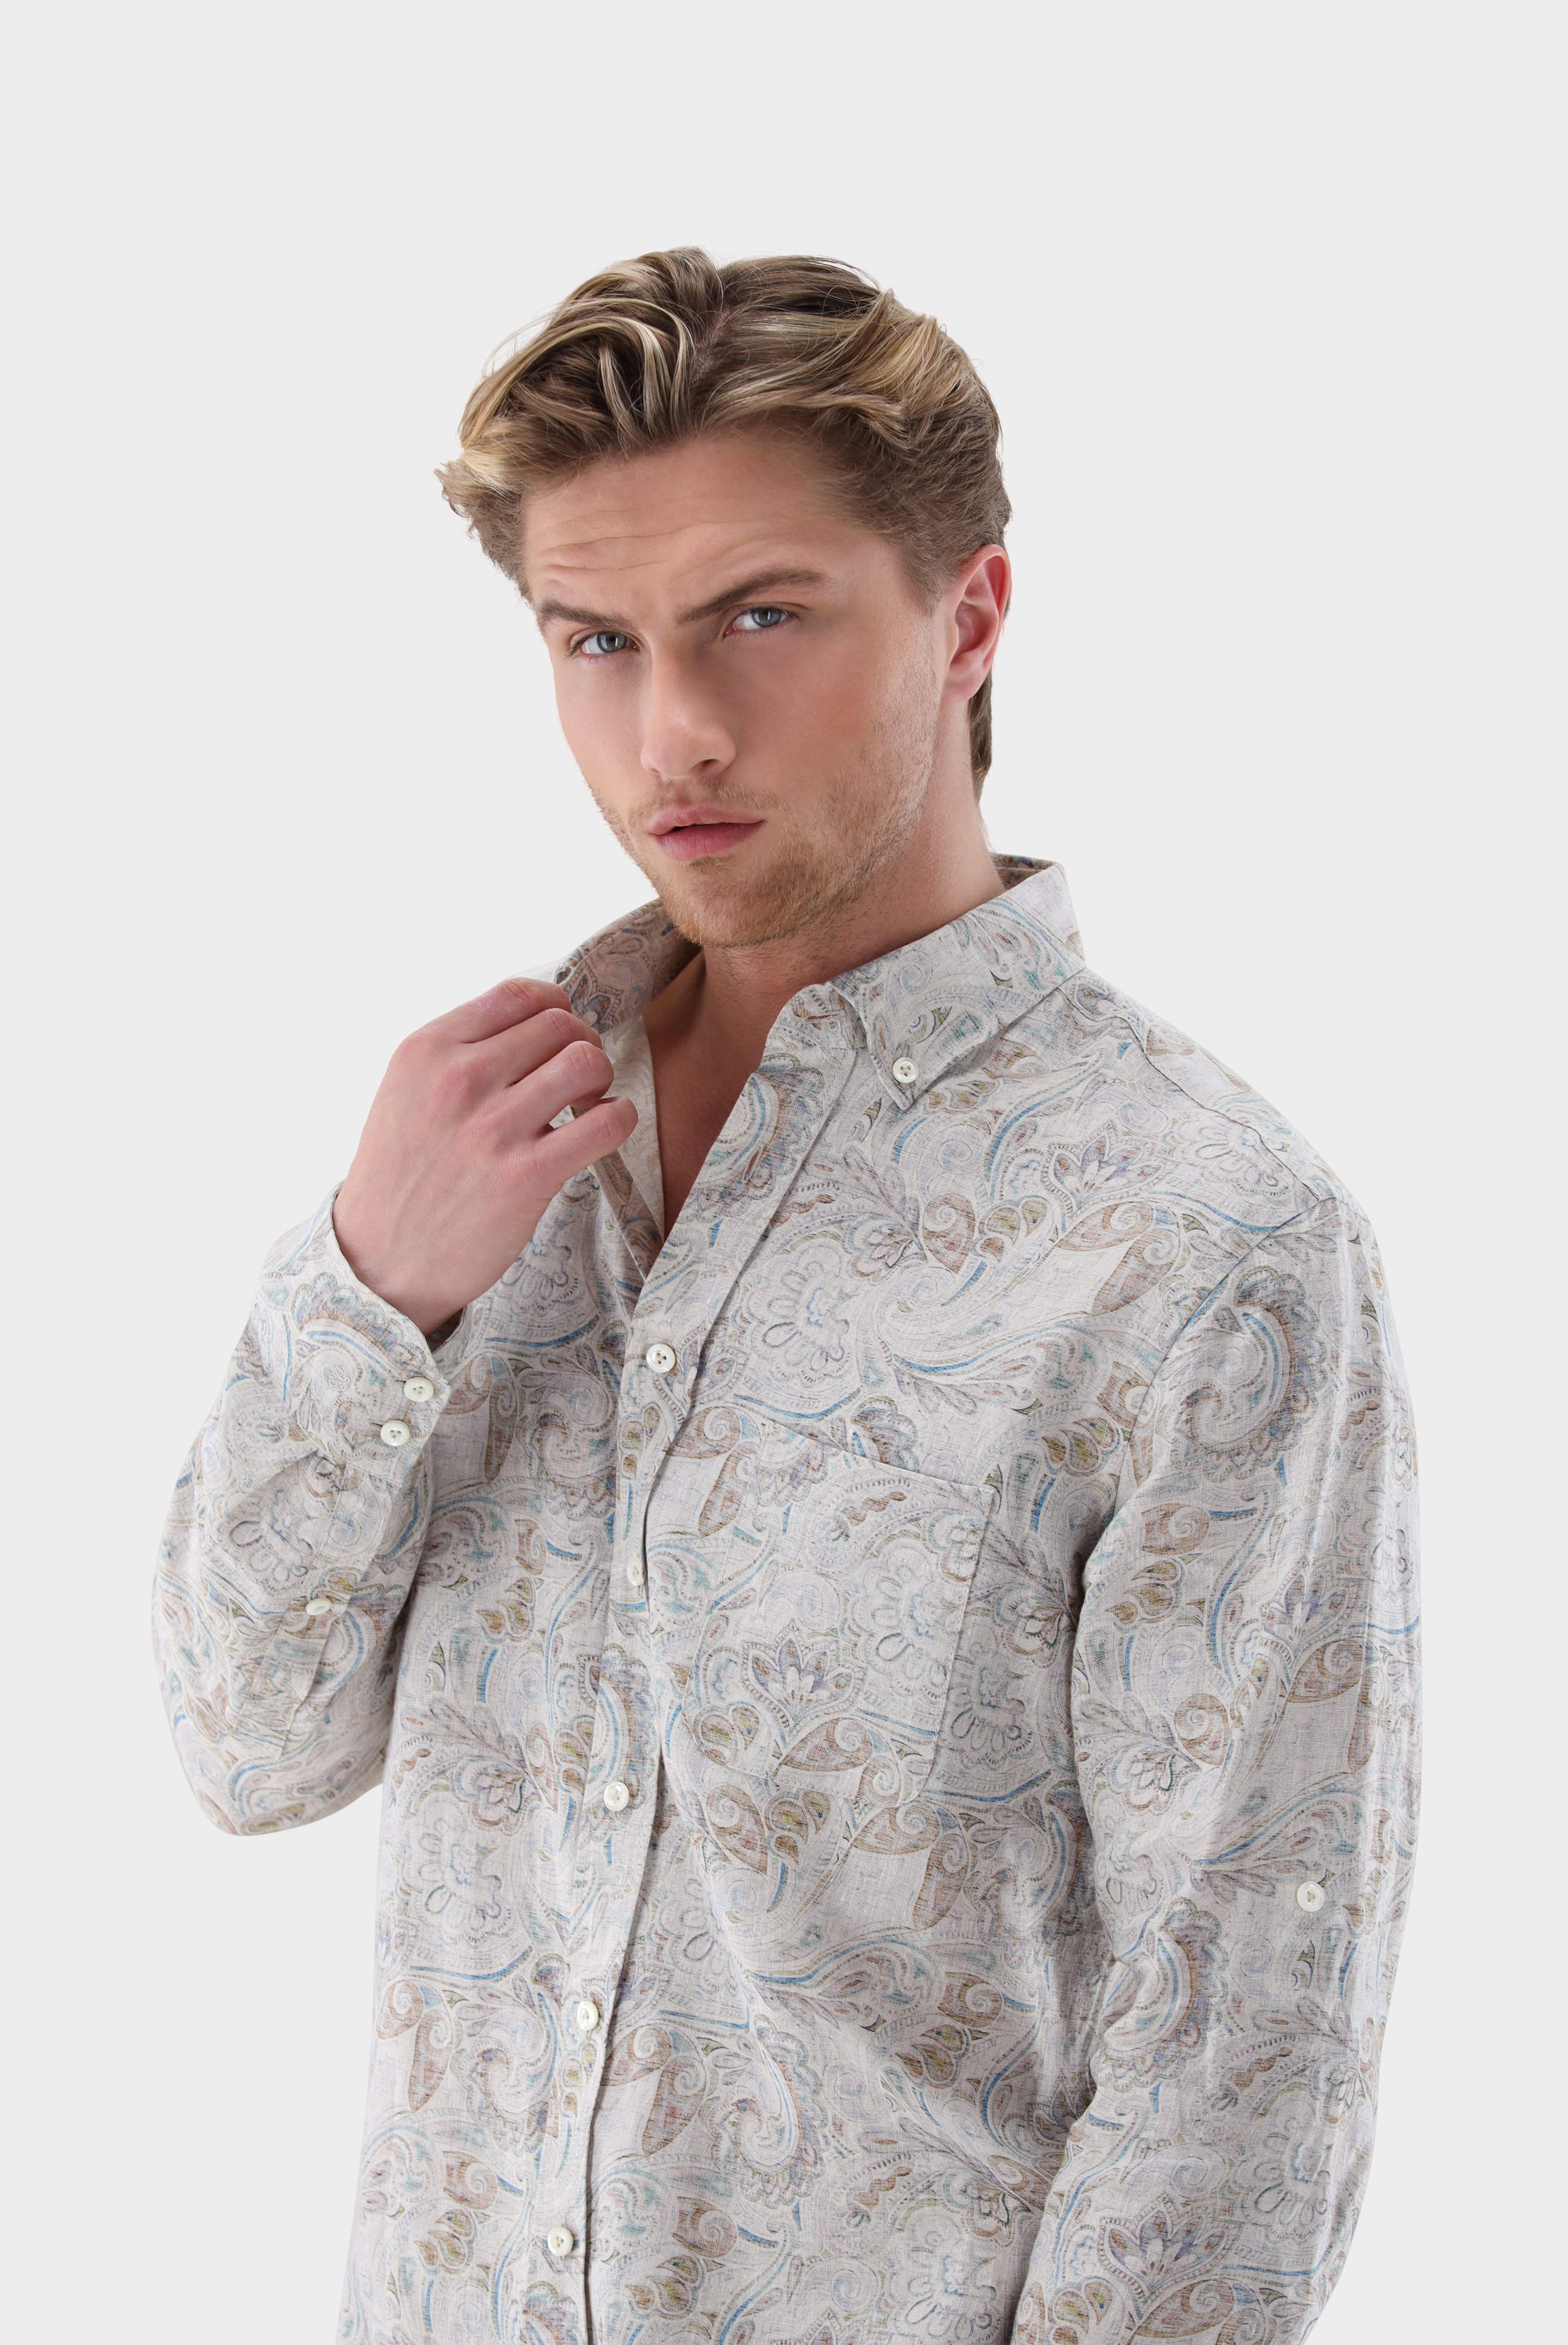 Casual Hemden+Leinenhemd mit Paisley-Druck Tailor Fit+20.2013.C4.172036.118.38